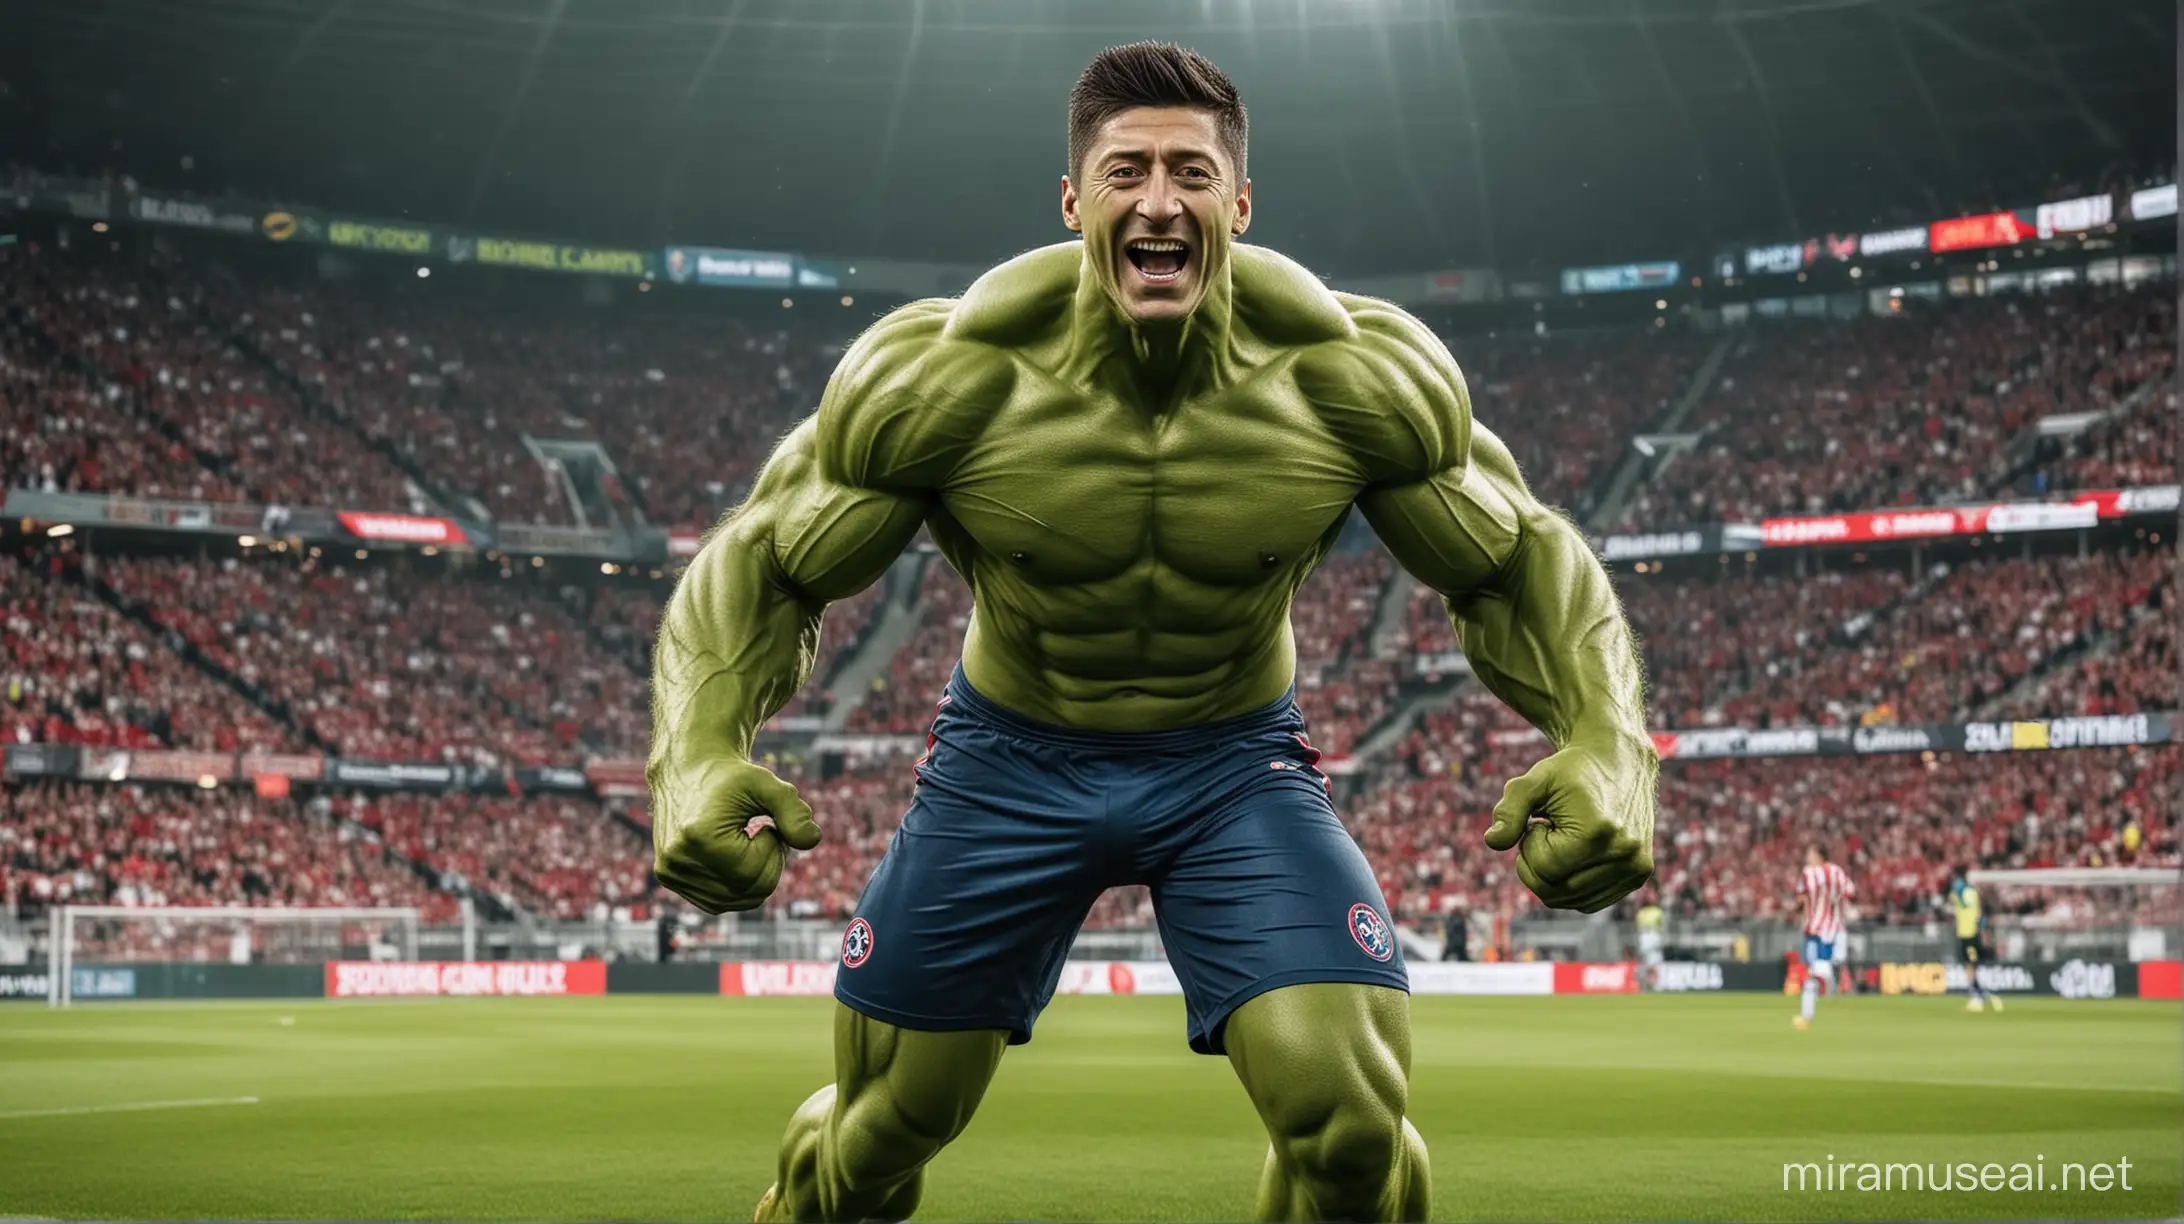 Robert Lewandowski Soccer Player Transforms into Hulk Superhero with Super Smiley Face on Football Field